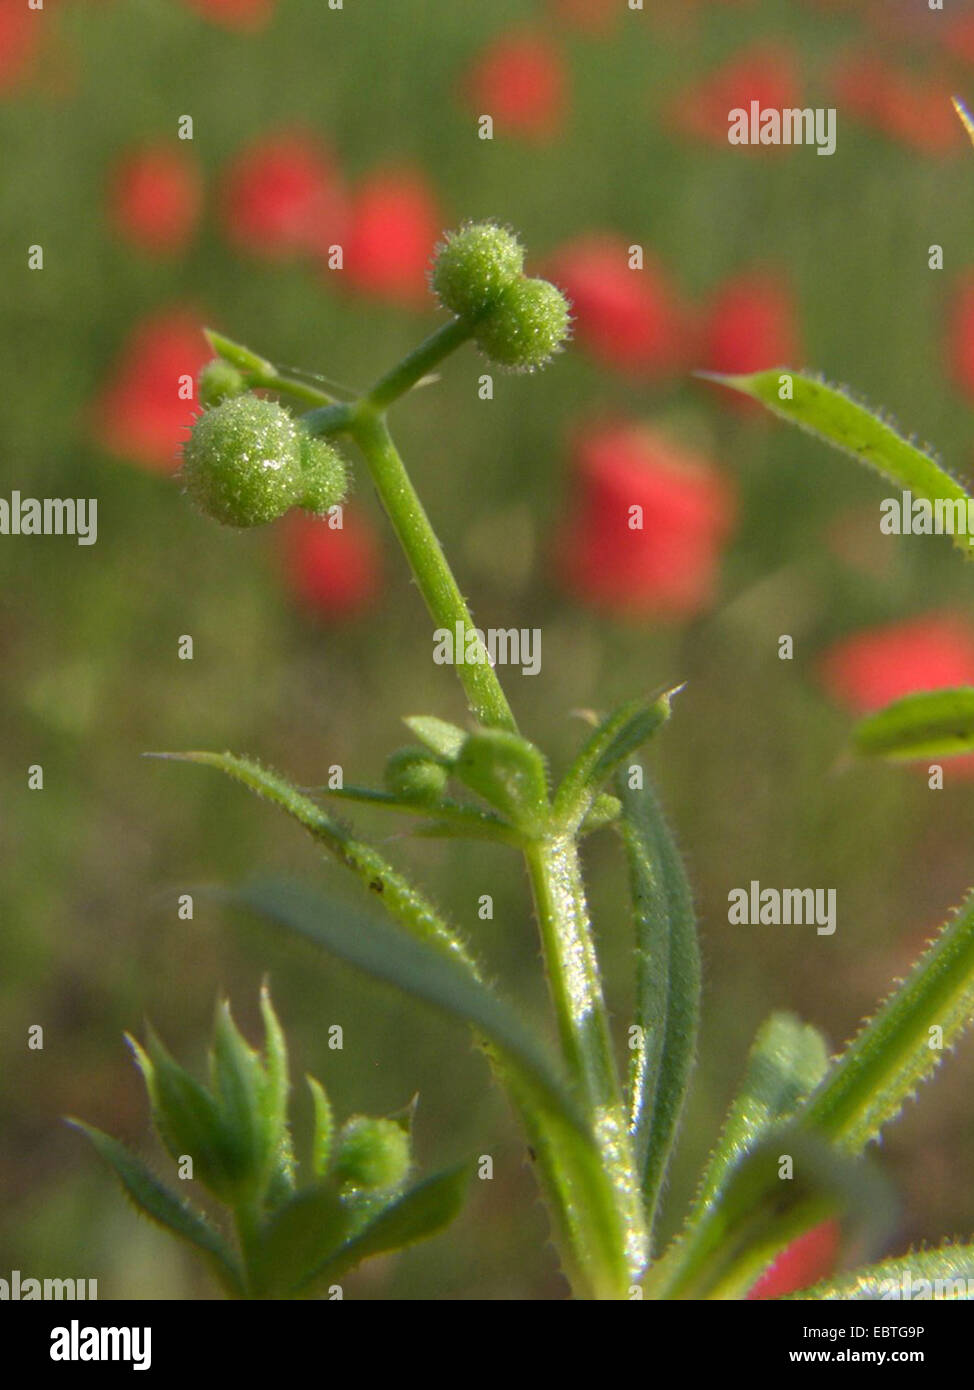 False cleavers, Marin county bedstraw (Galium spurium), fruits, Poland Stock Photo